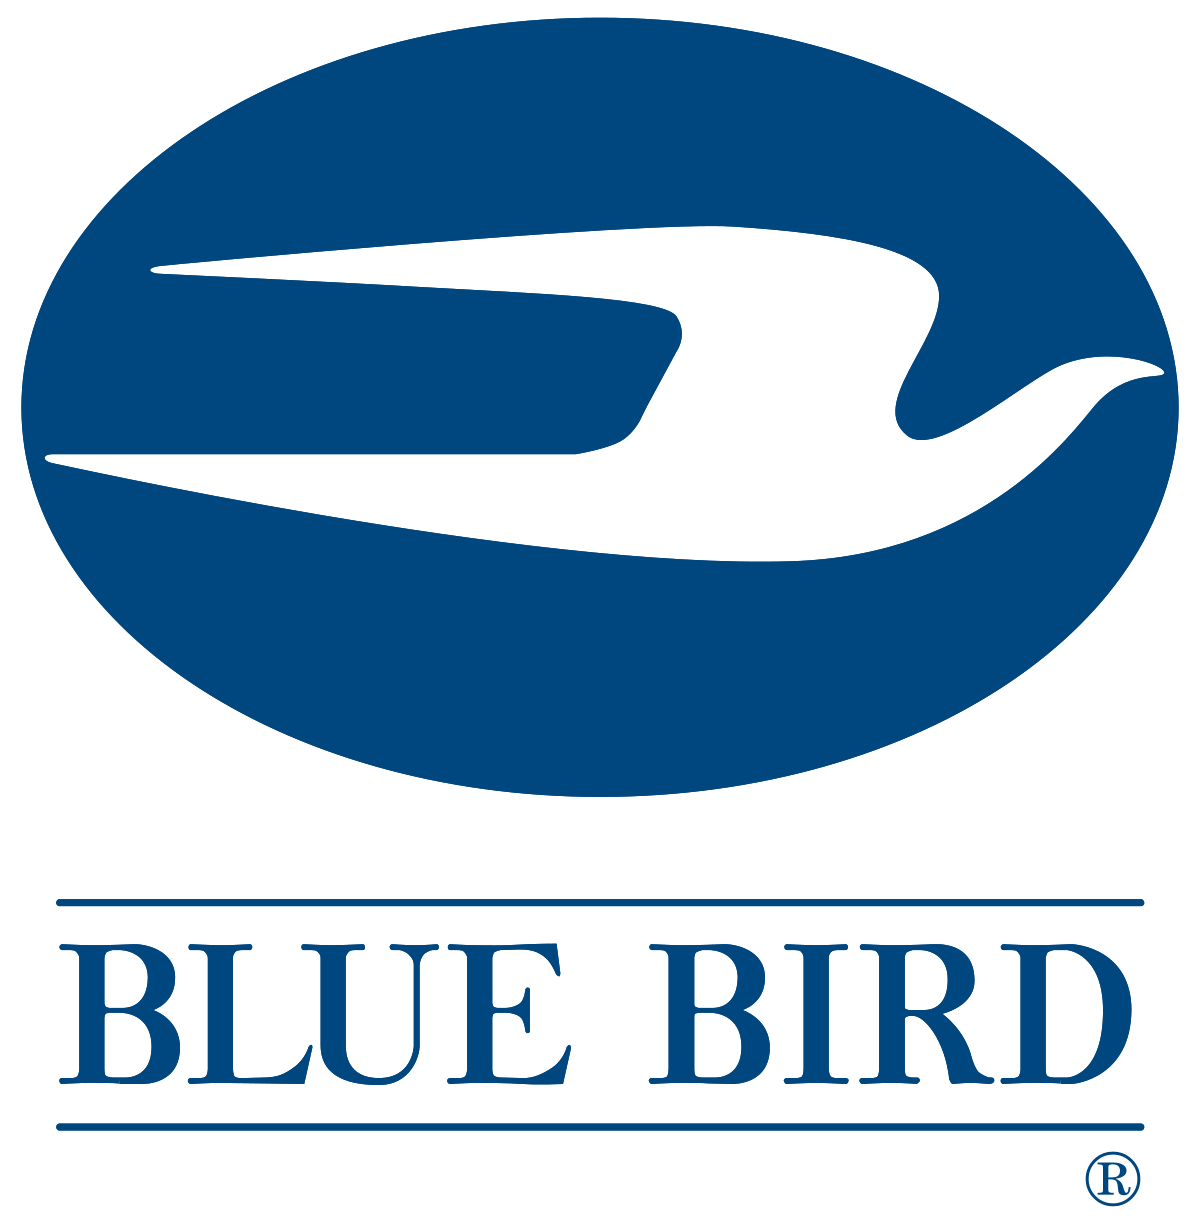 Blue Bird Company Logo - Blue Bird Corporation